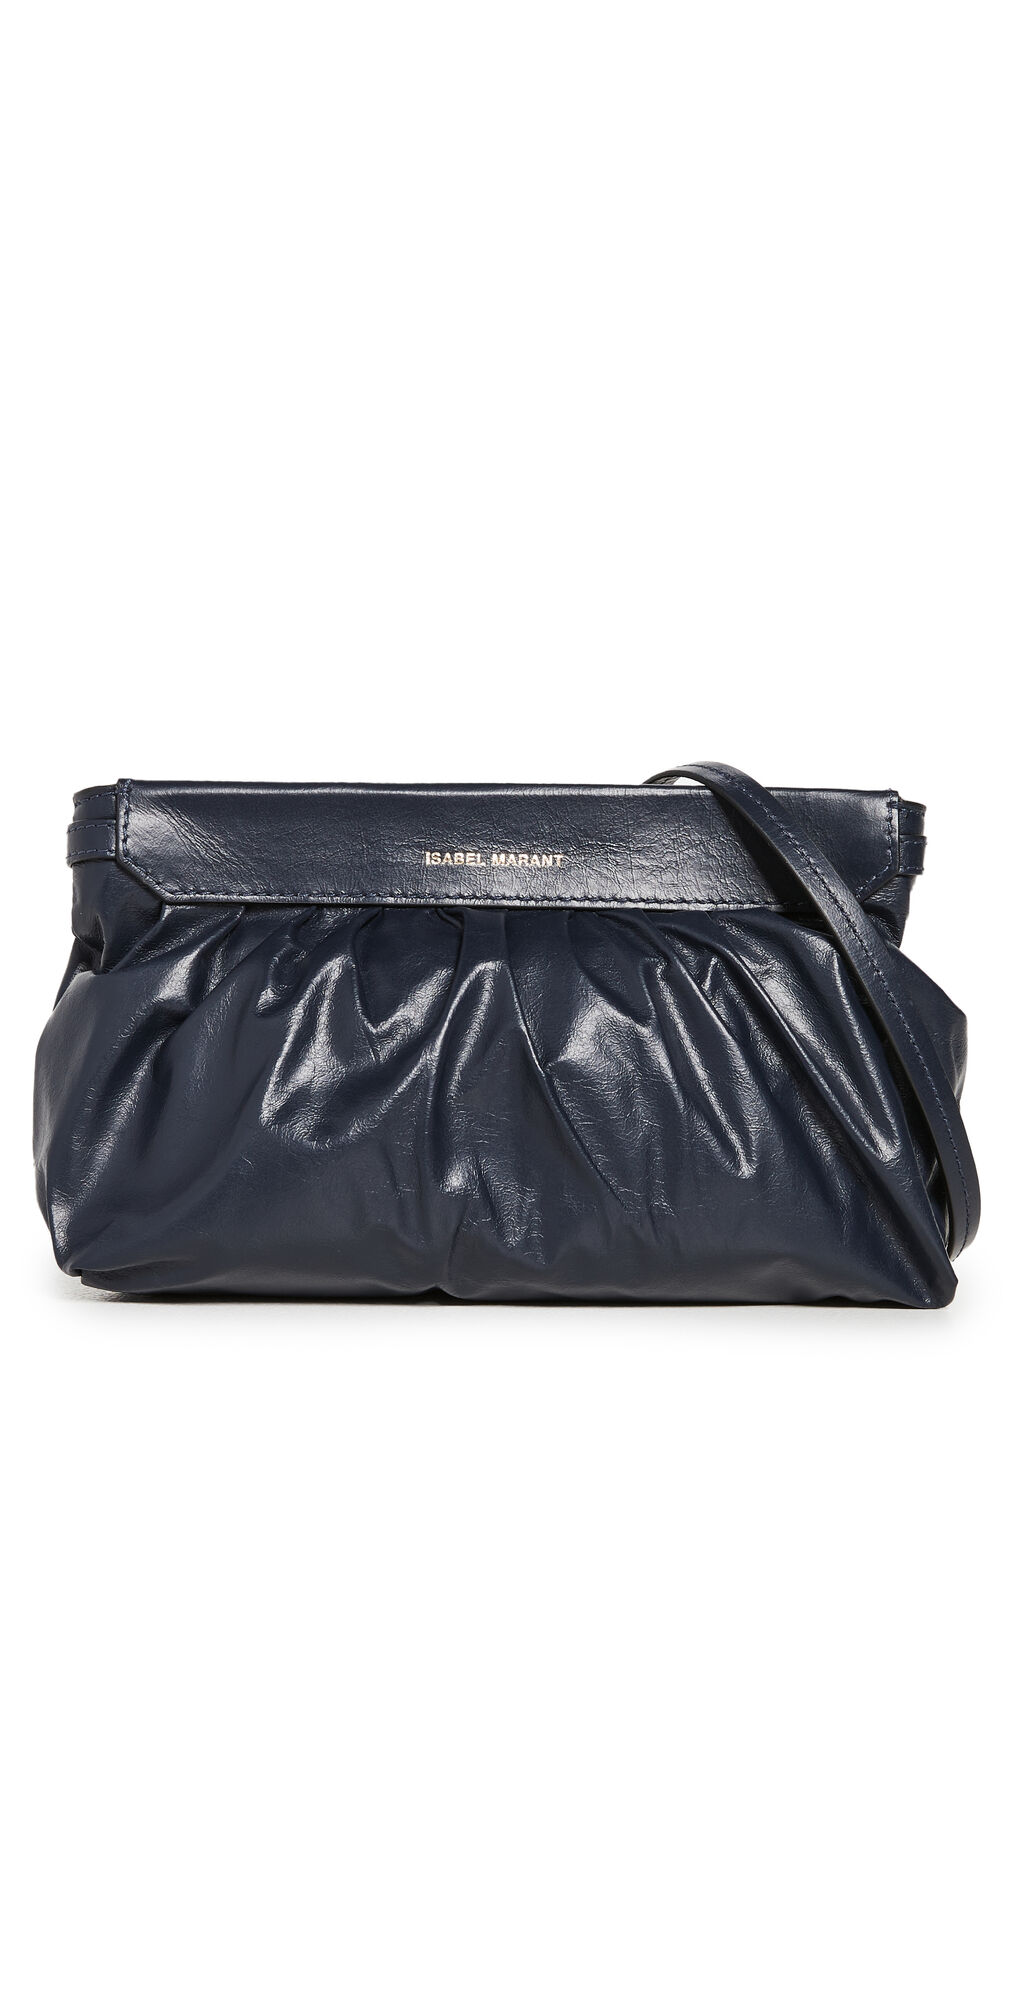 Isabel Marant Luzes Bag Midnight One Size  Midnight  size:One Size